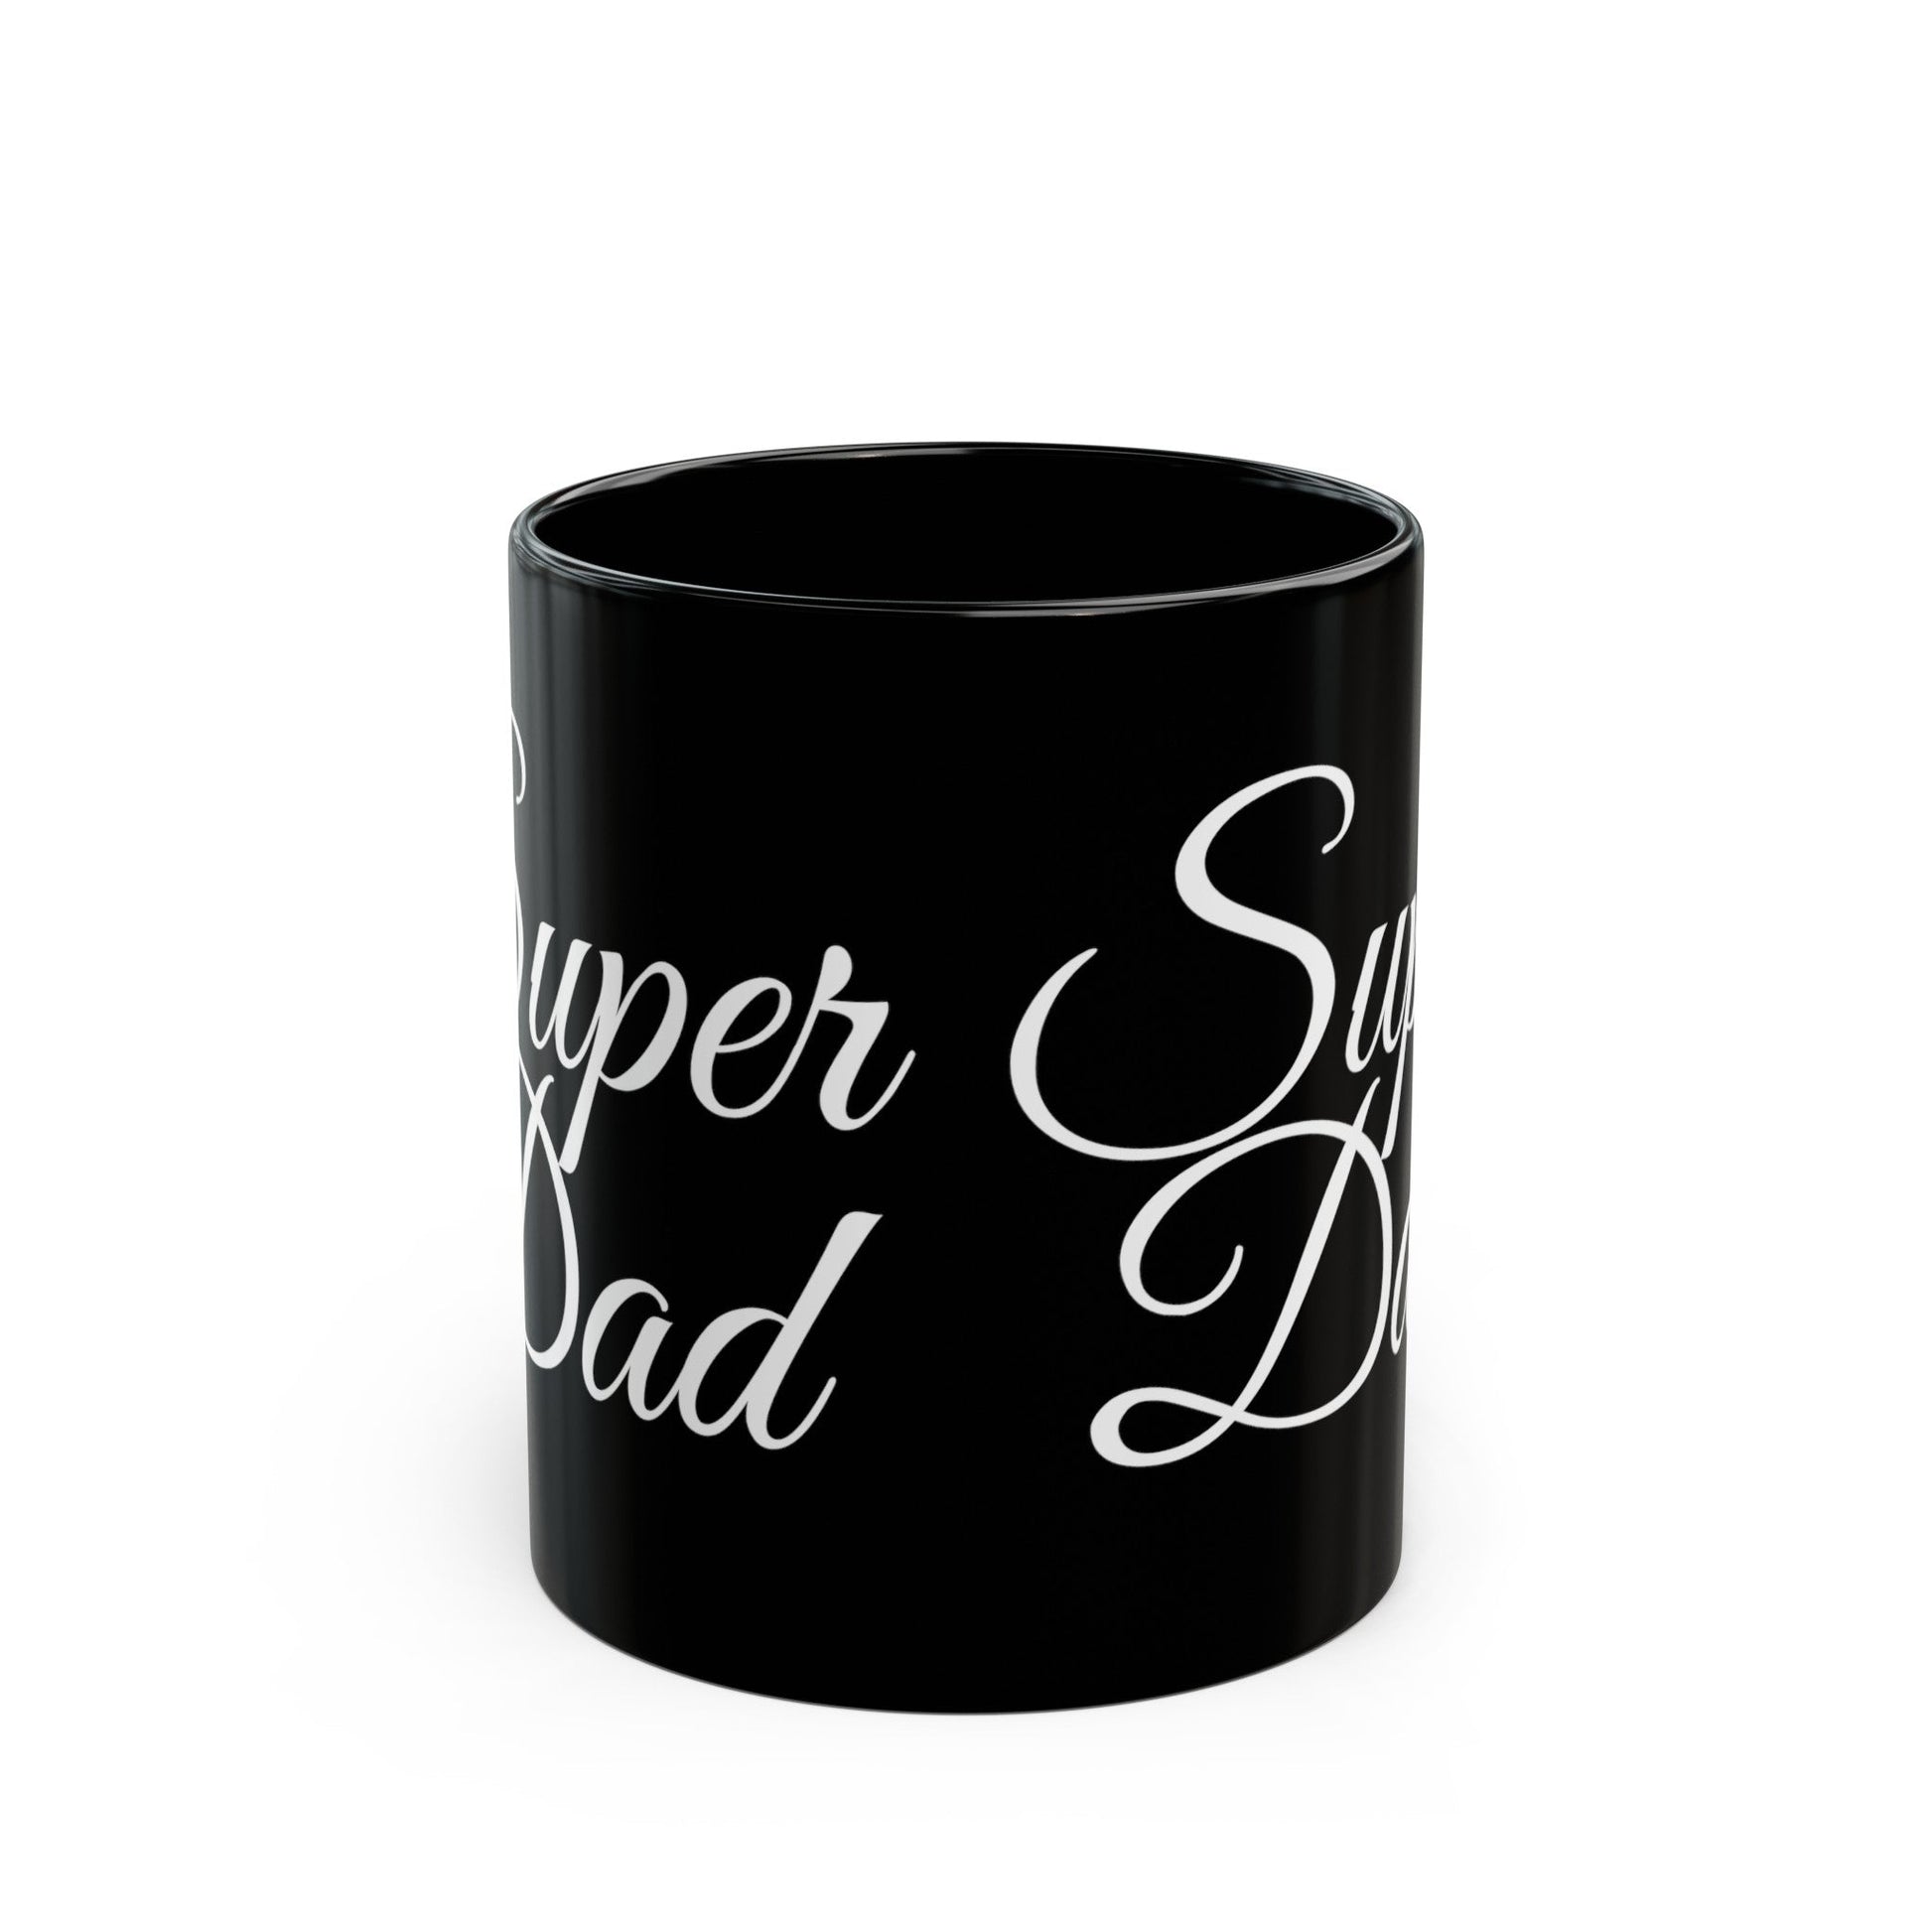 Super Dad | 11 oz Black Mug